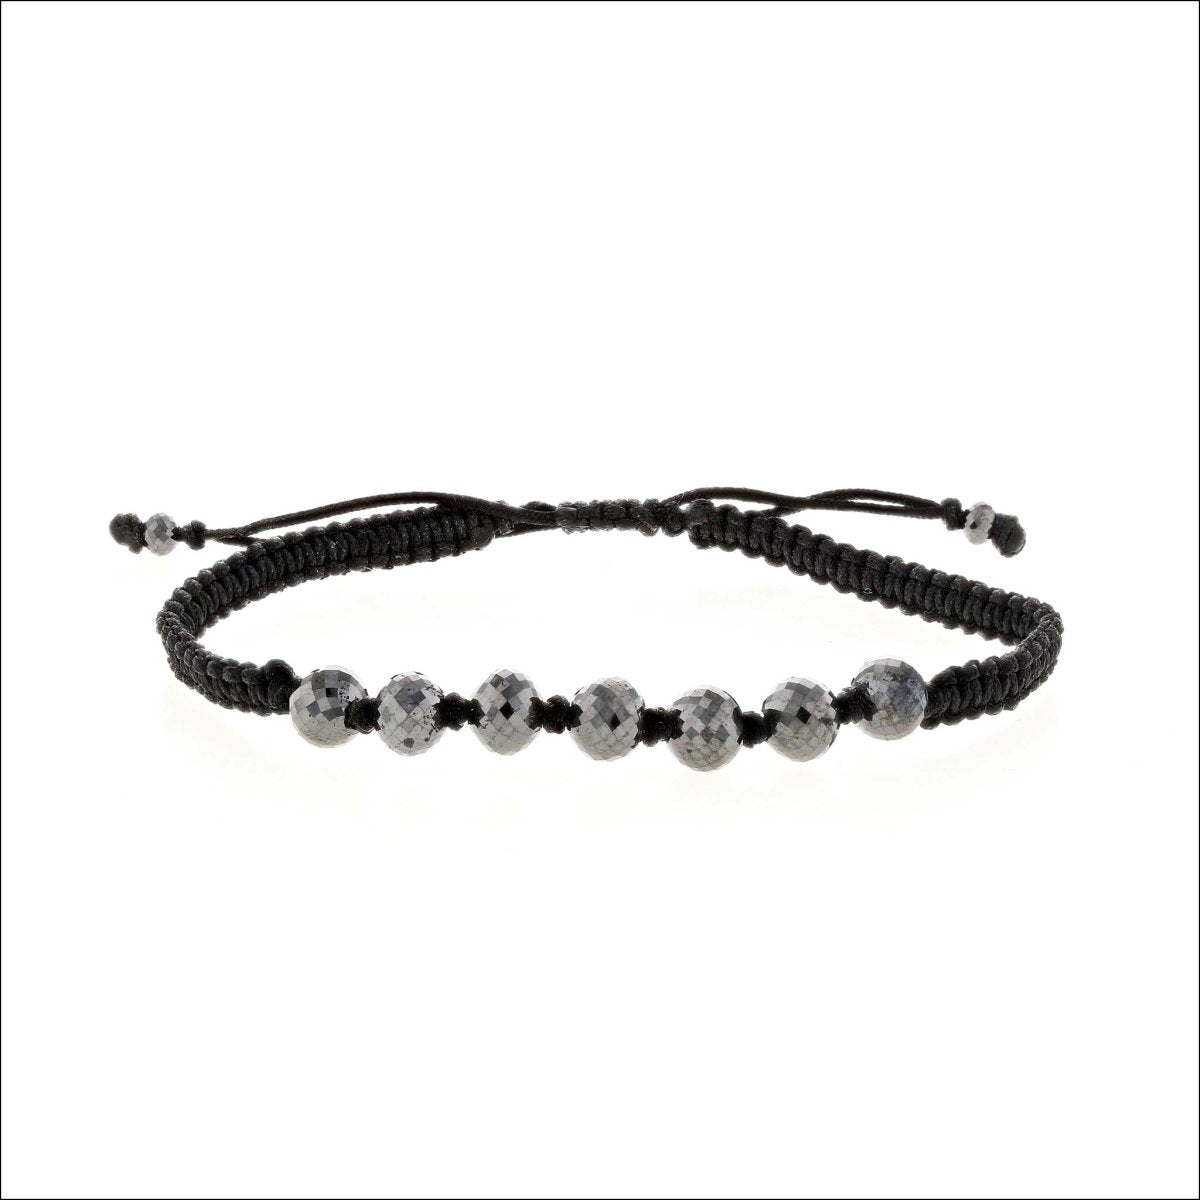 15cttw Black Diamond Bead Woven Silk Cord Bracelet - JewelsmithBracelets